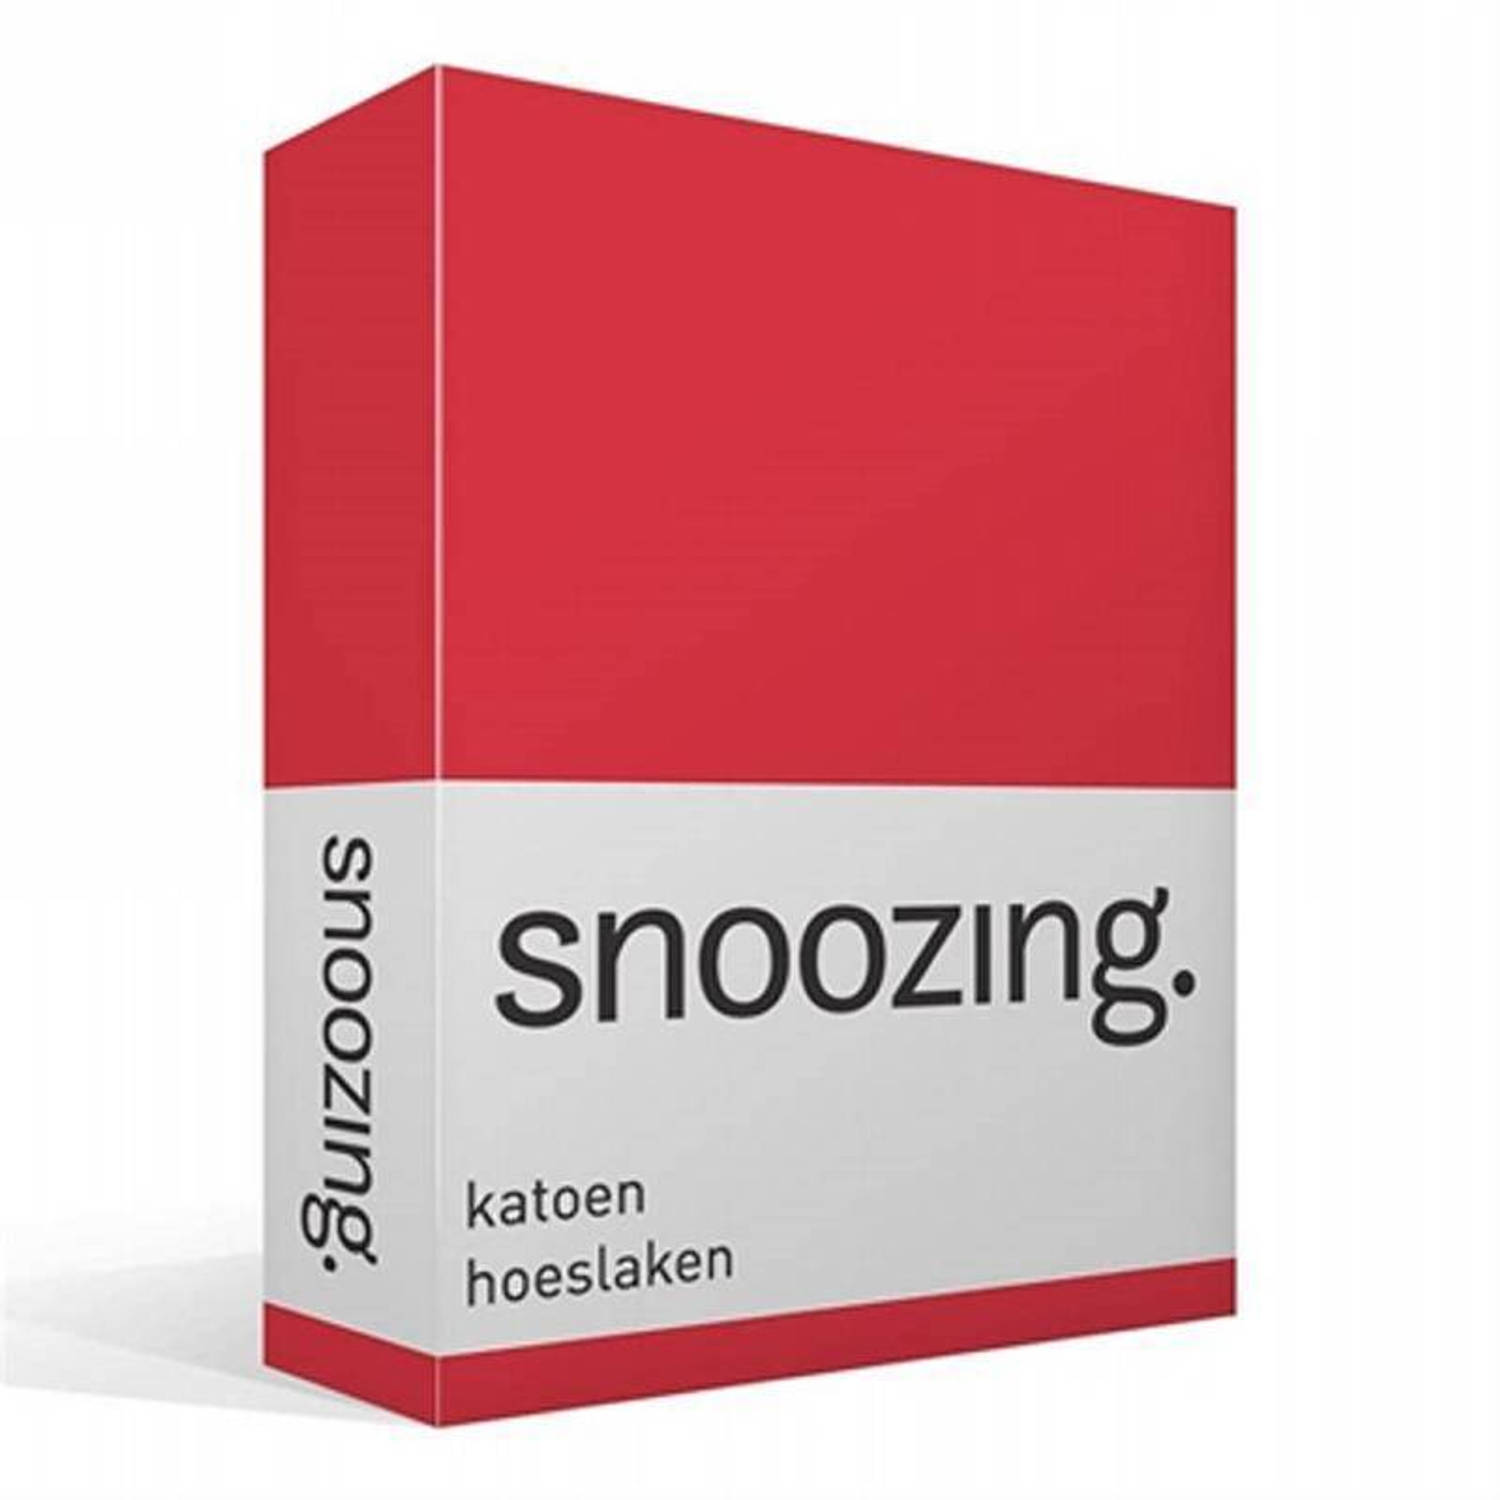 Snoozing katoen hoeslaken - 100% katoen - Lits-jumeaux (180x210 cm) - Rood